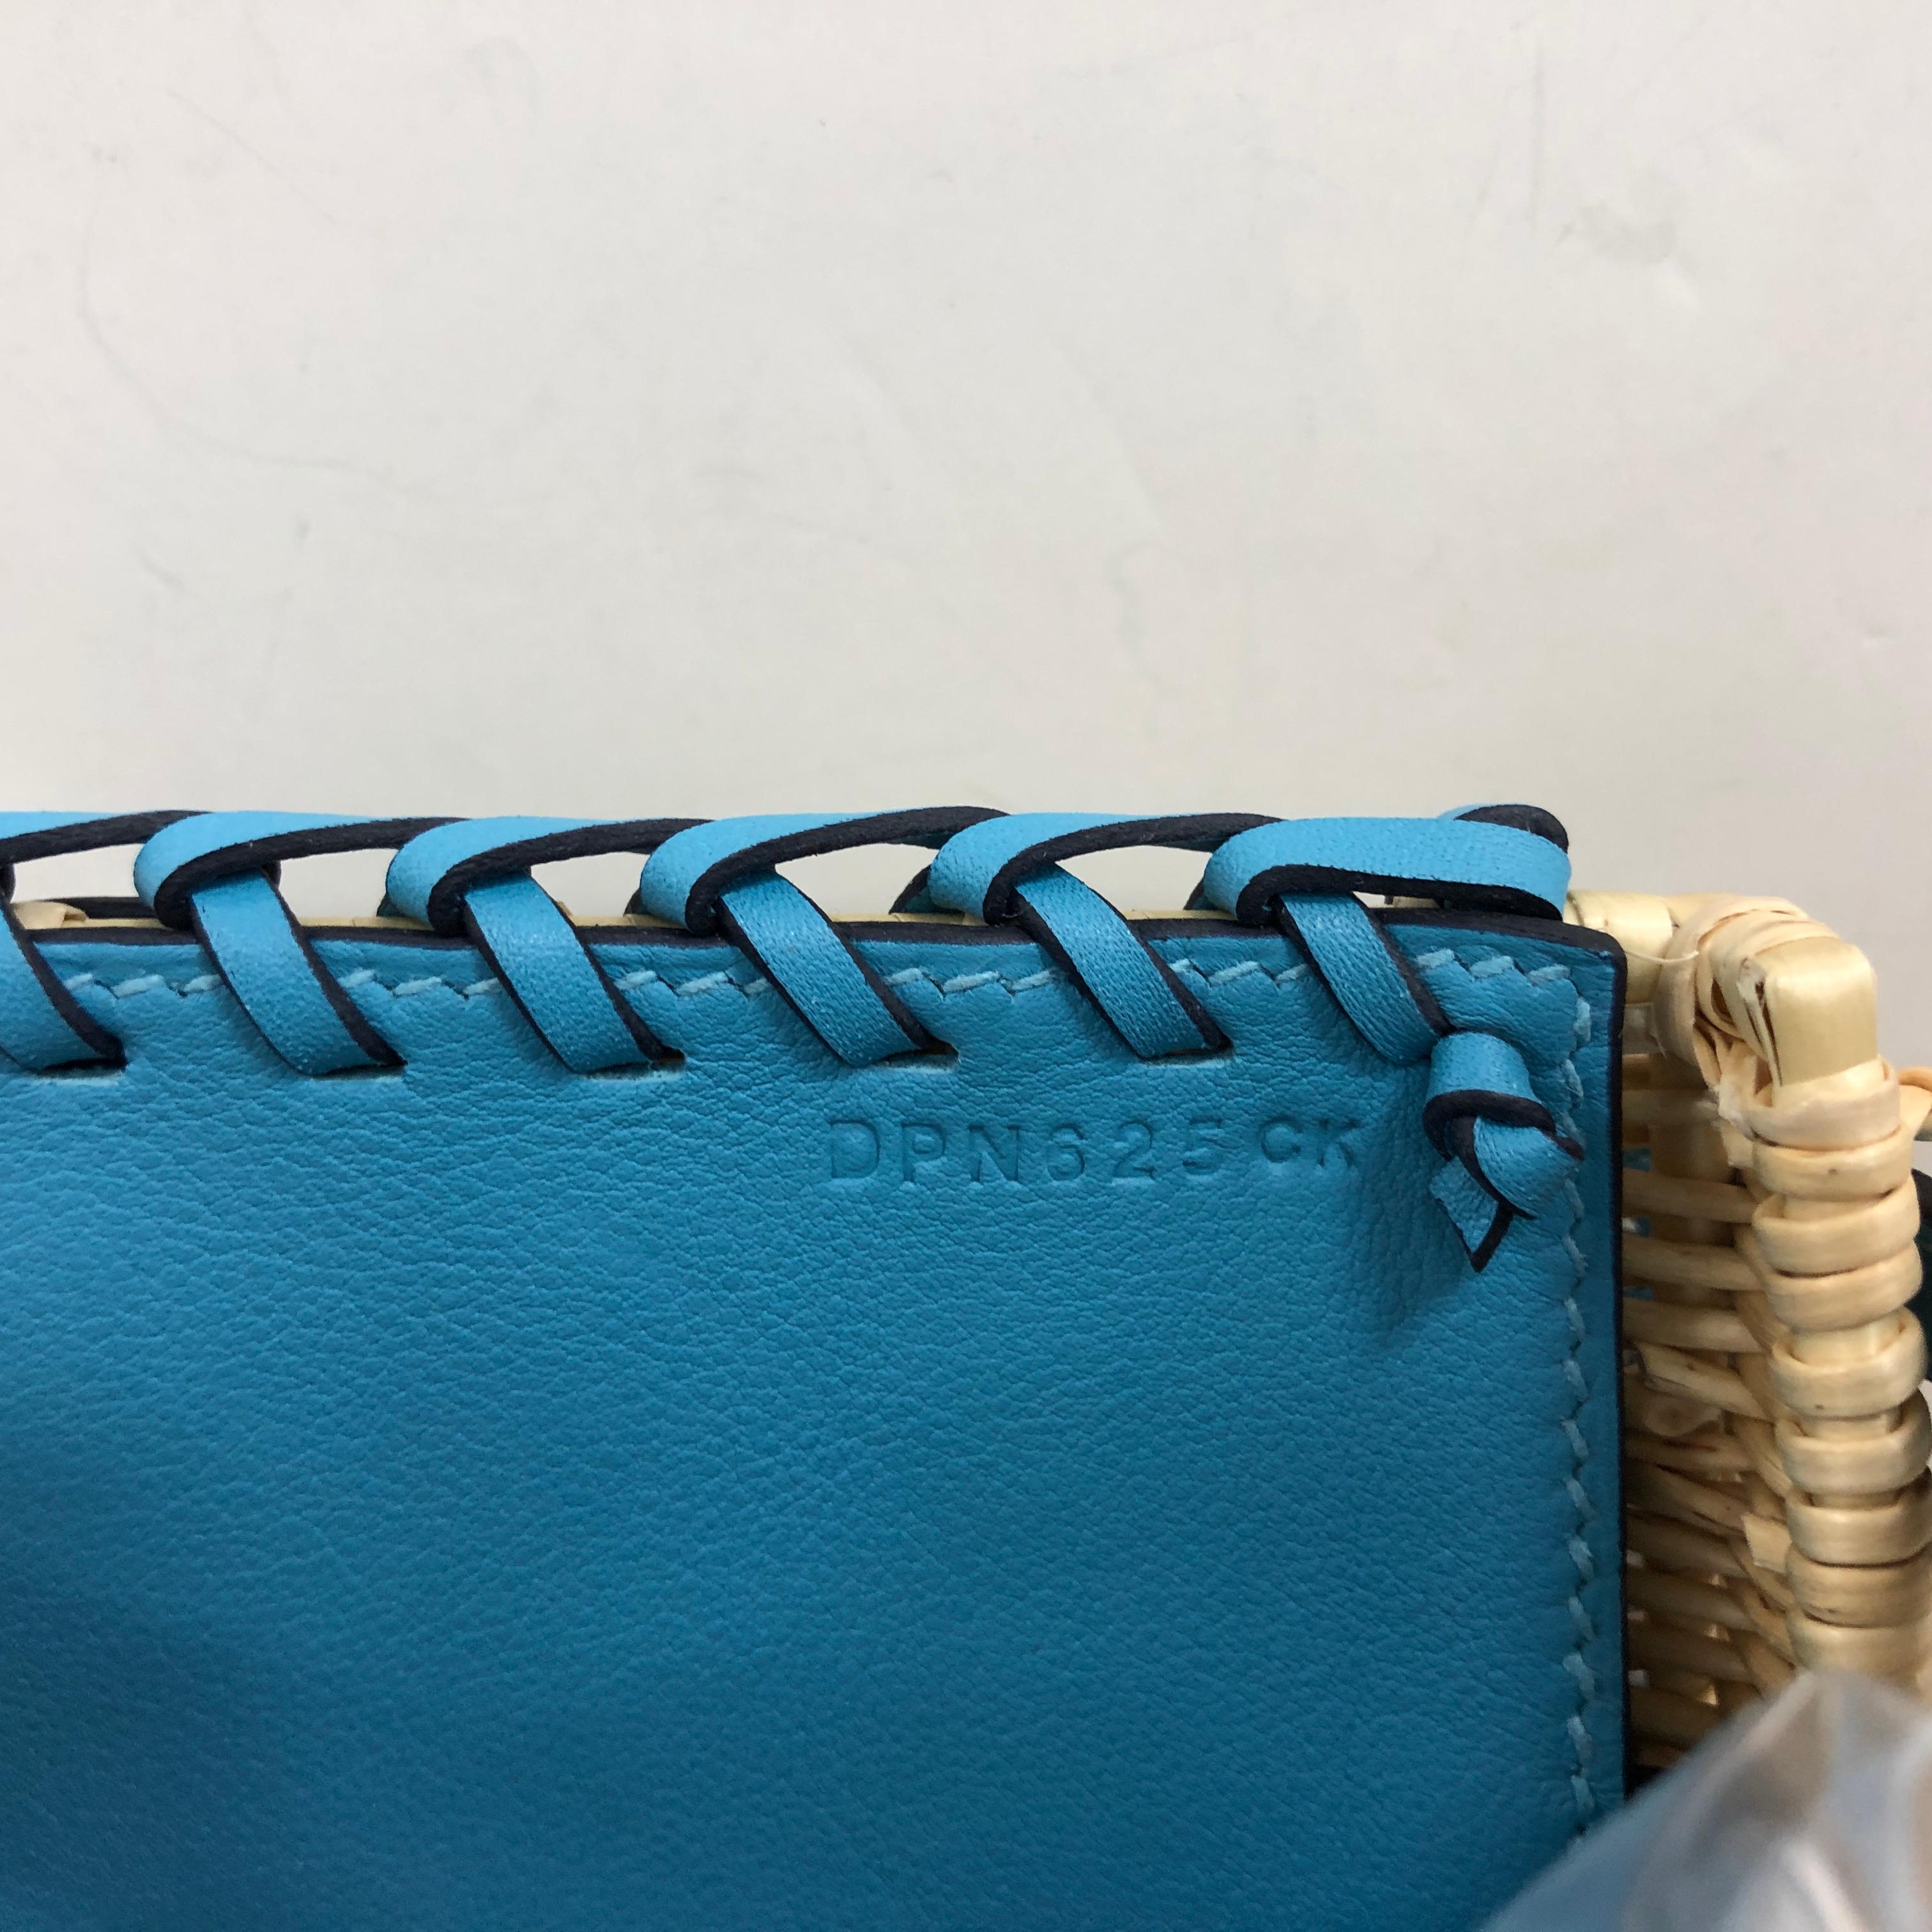 Picnic Kelly Handbag Bleu du Nord Swift and Wicker with Palladium Hardware 20 3